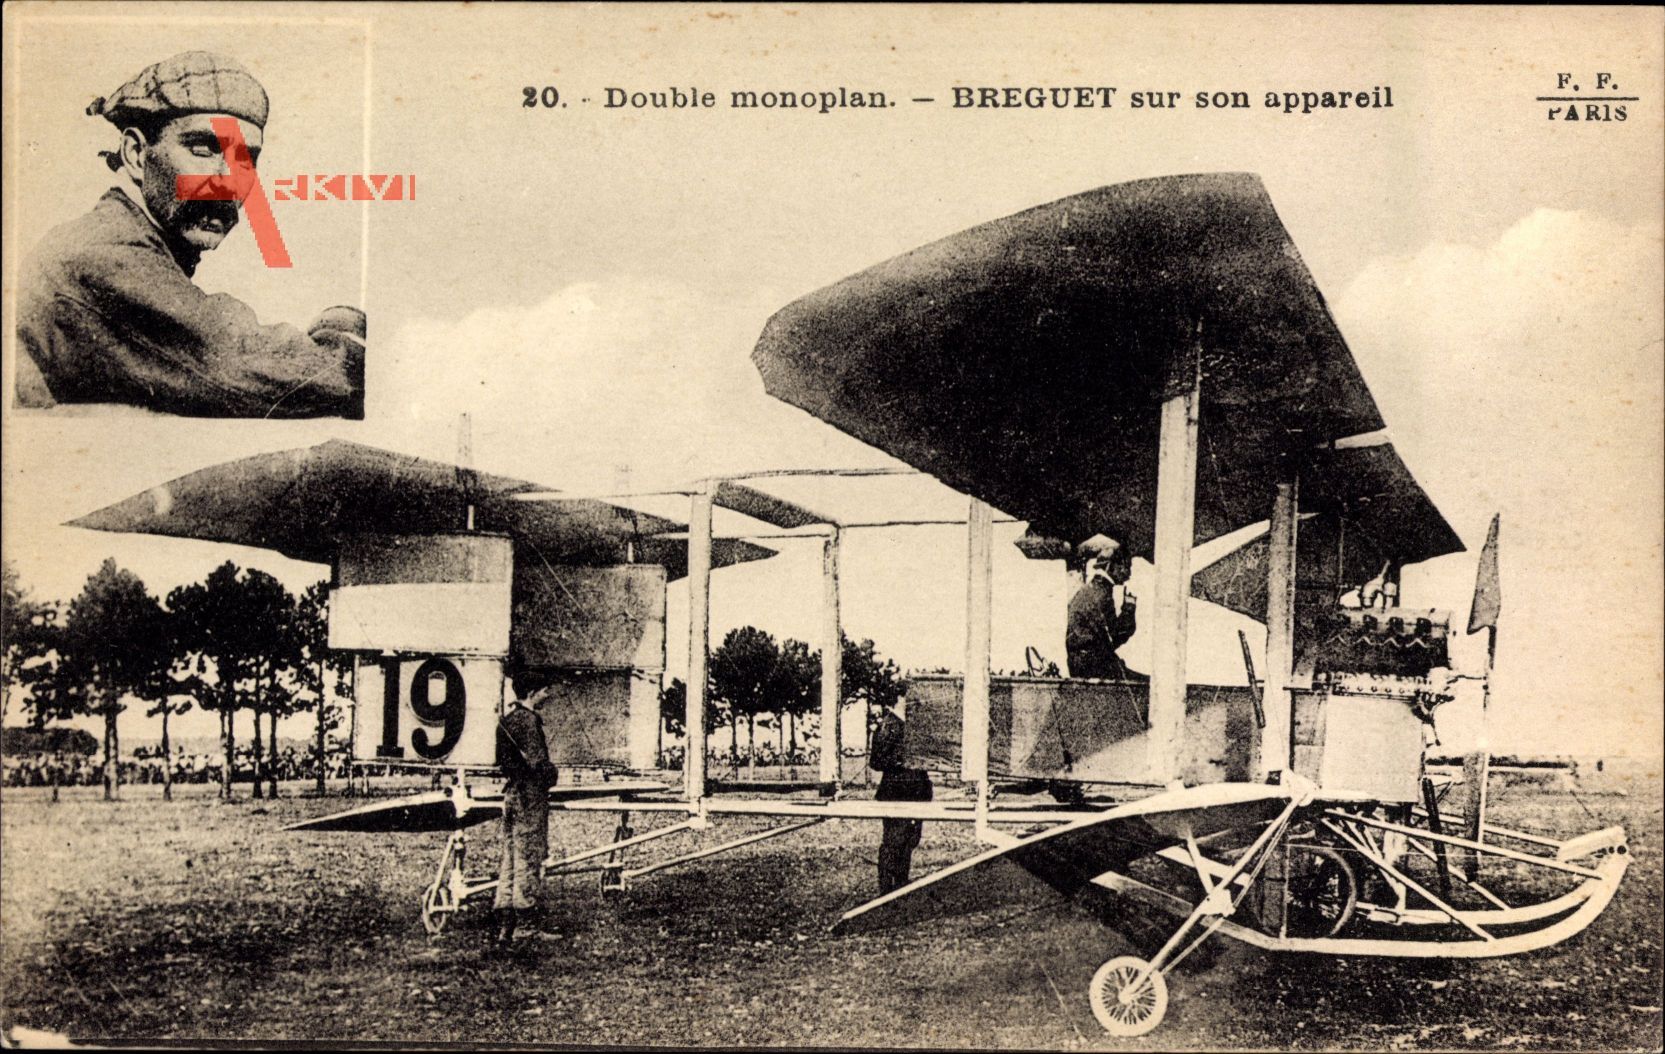 Double monoplan, Breguet sur son appareil, Biplan